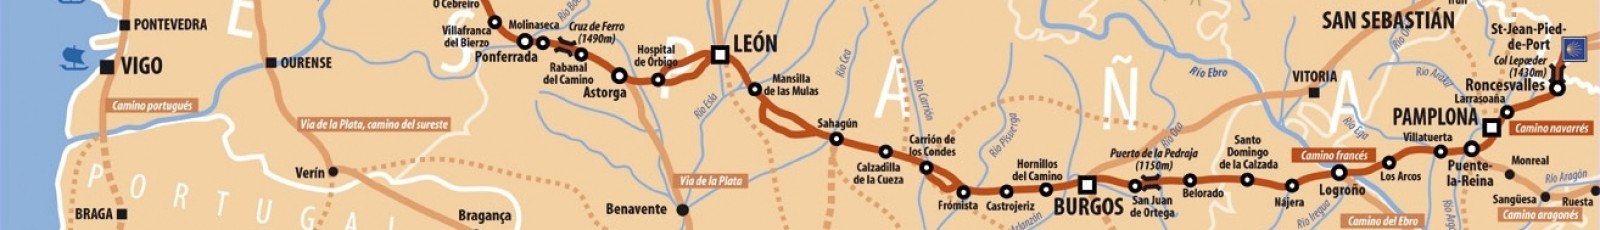 Santiago de Compostella pilgrimage route